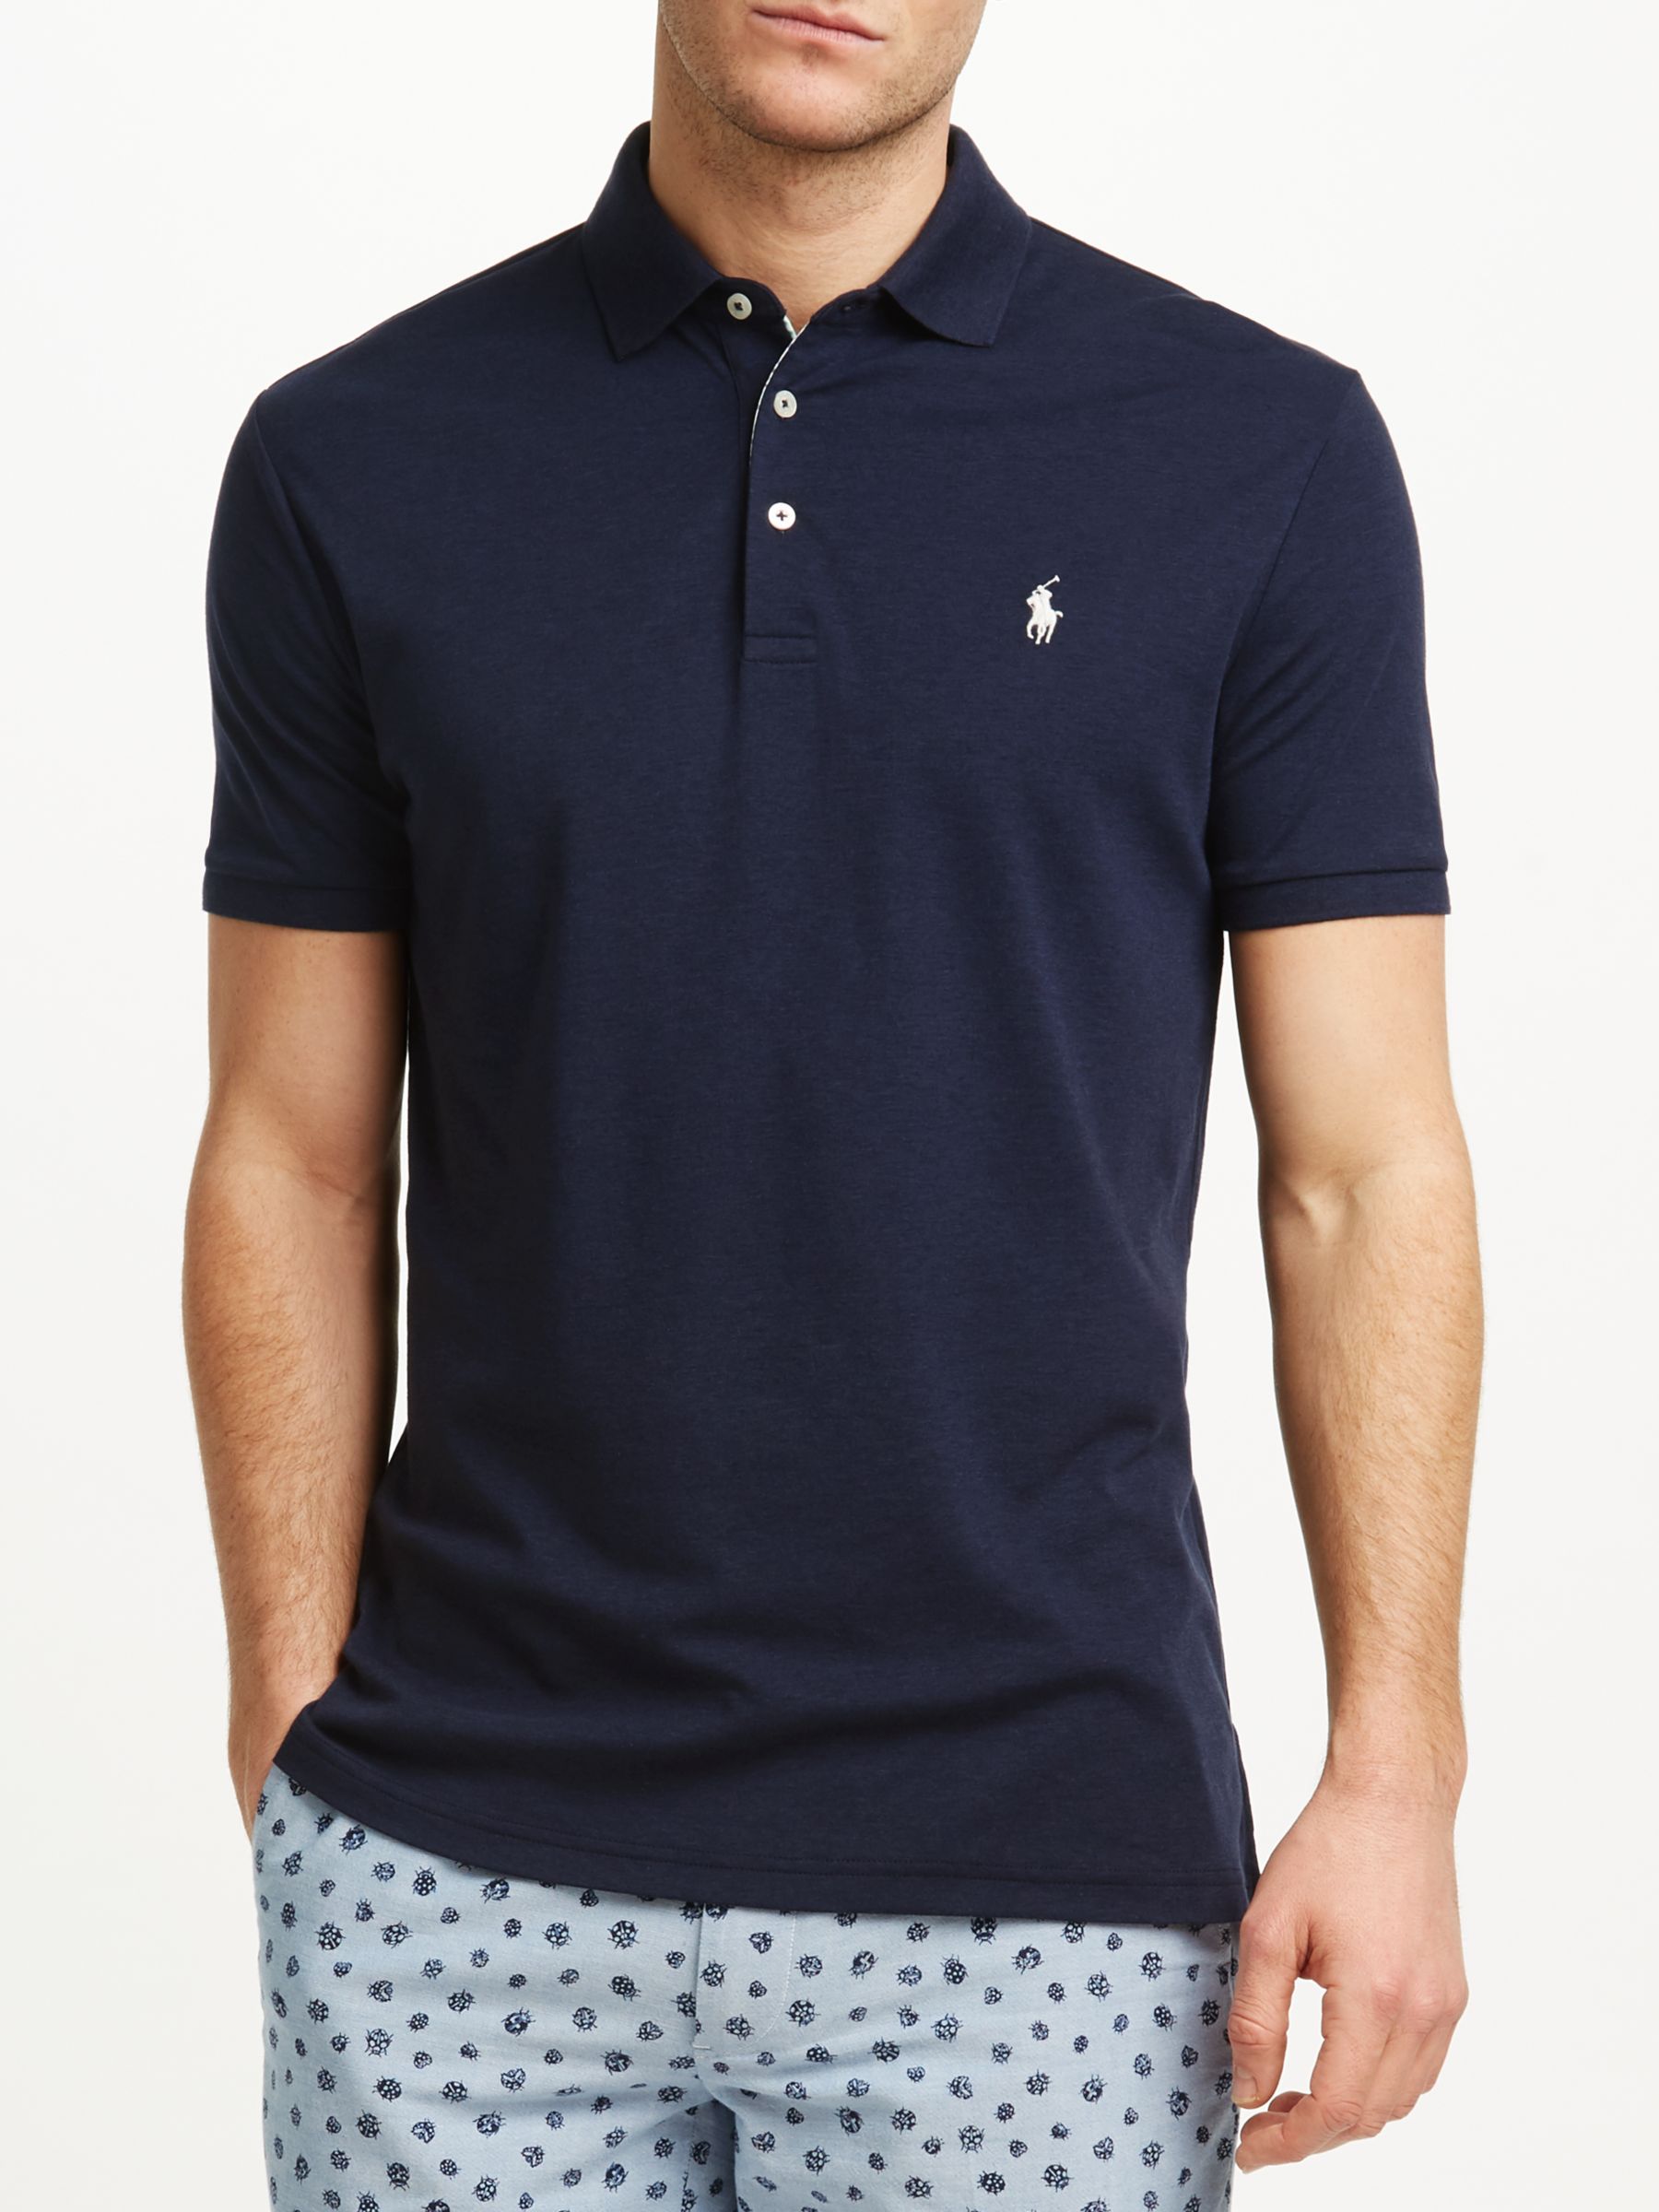 ralph lauren polo golf shirts on sale